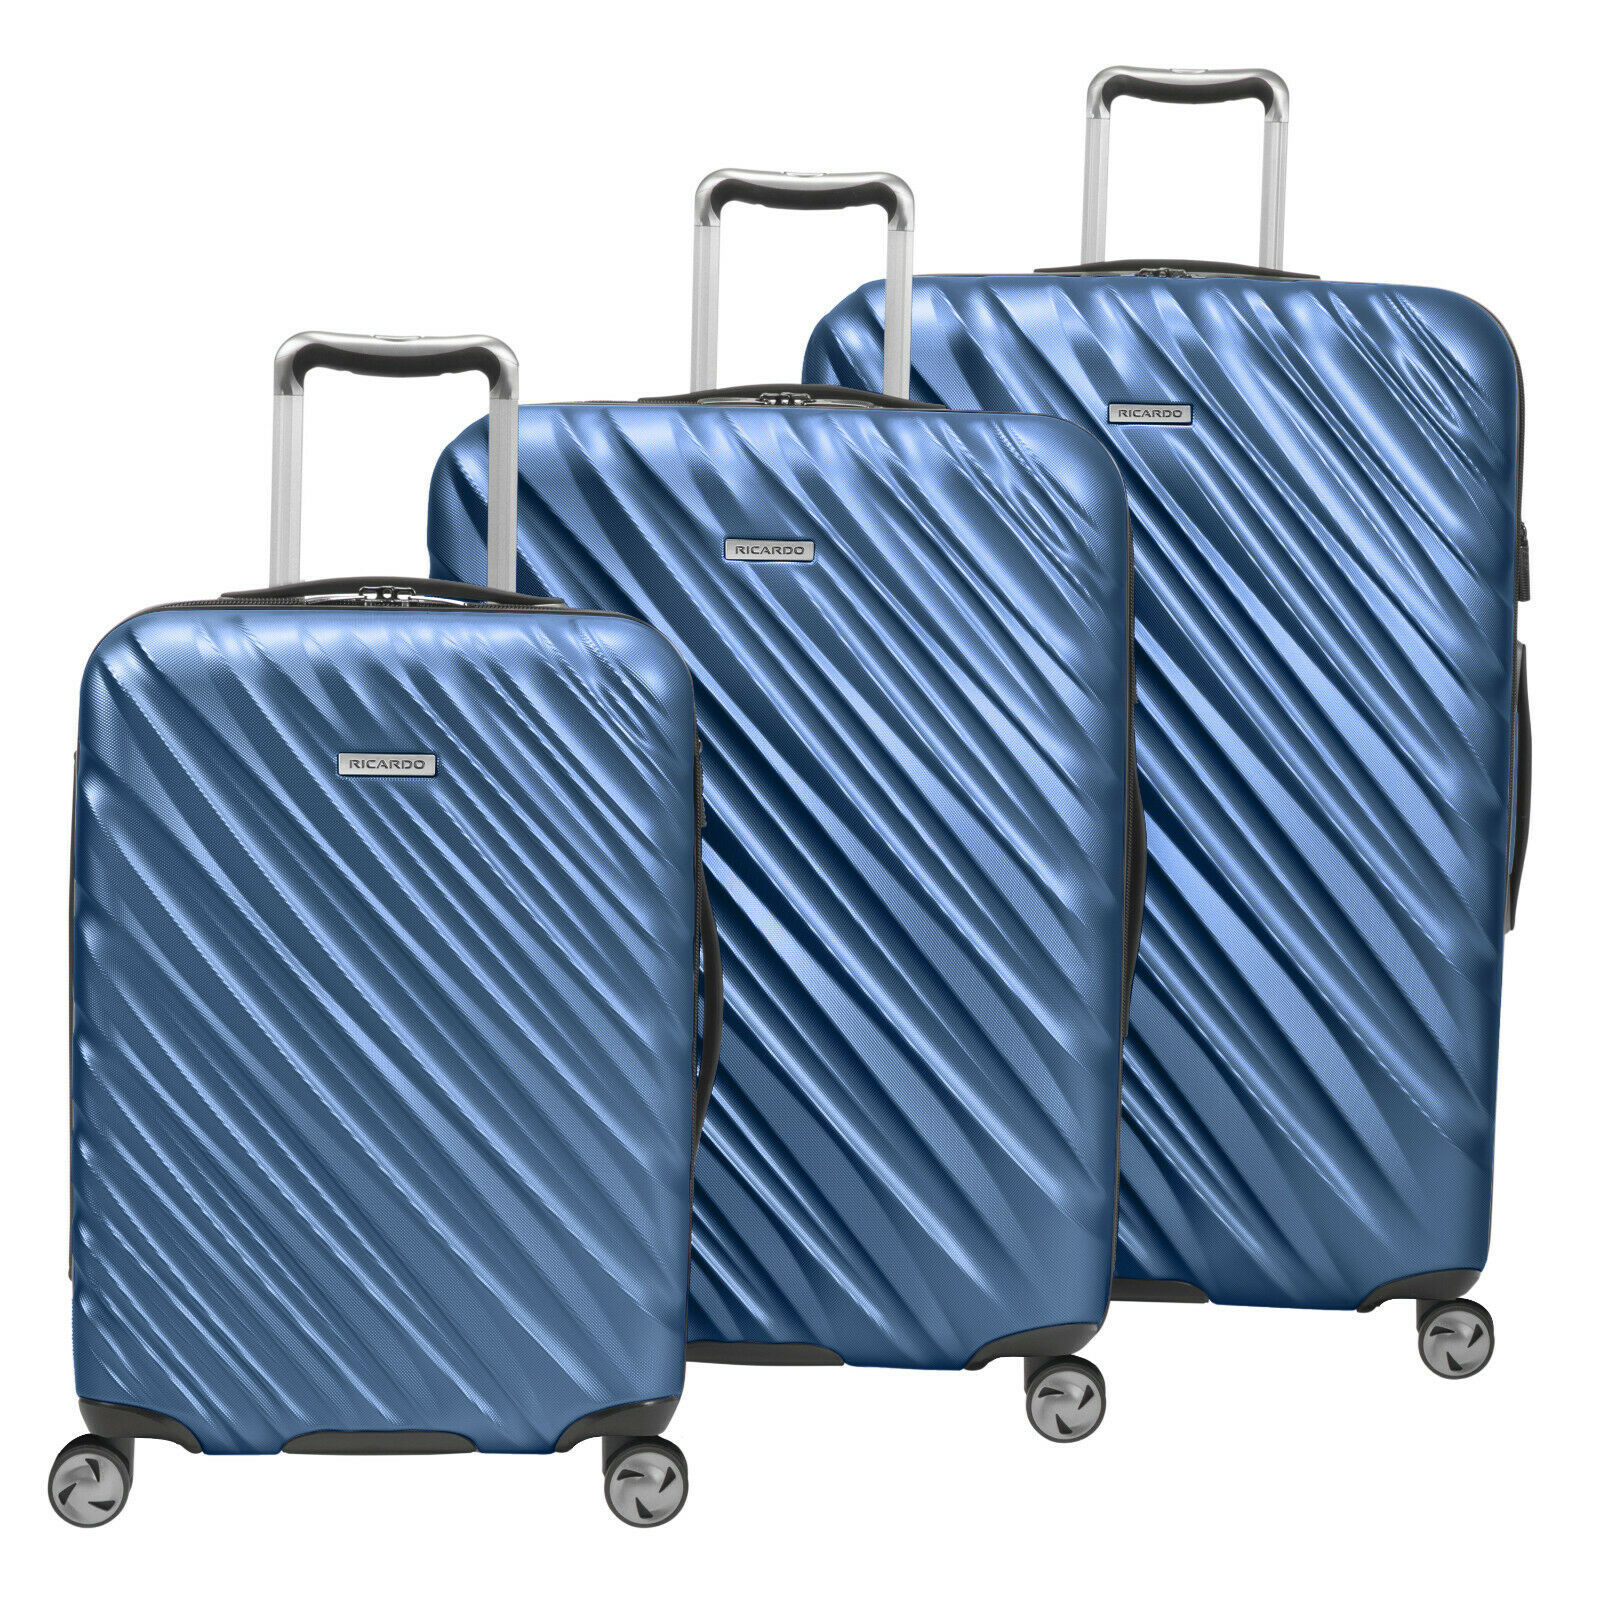 Ricardo Mojave Hardside 3-Piece Set Twilight Blue and Free Travel Kit